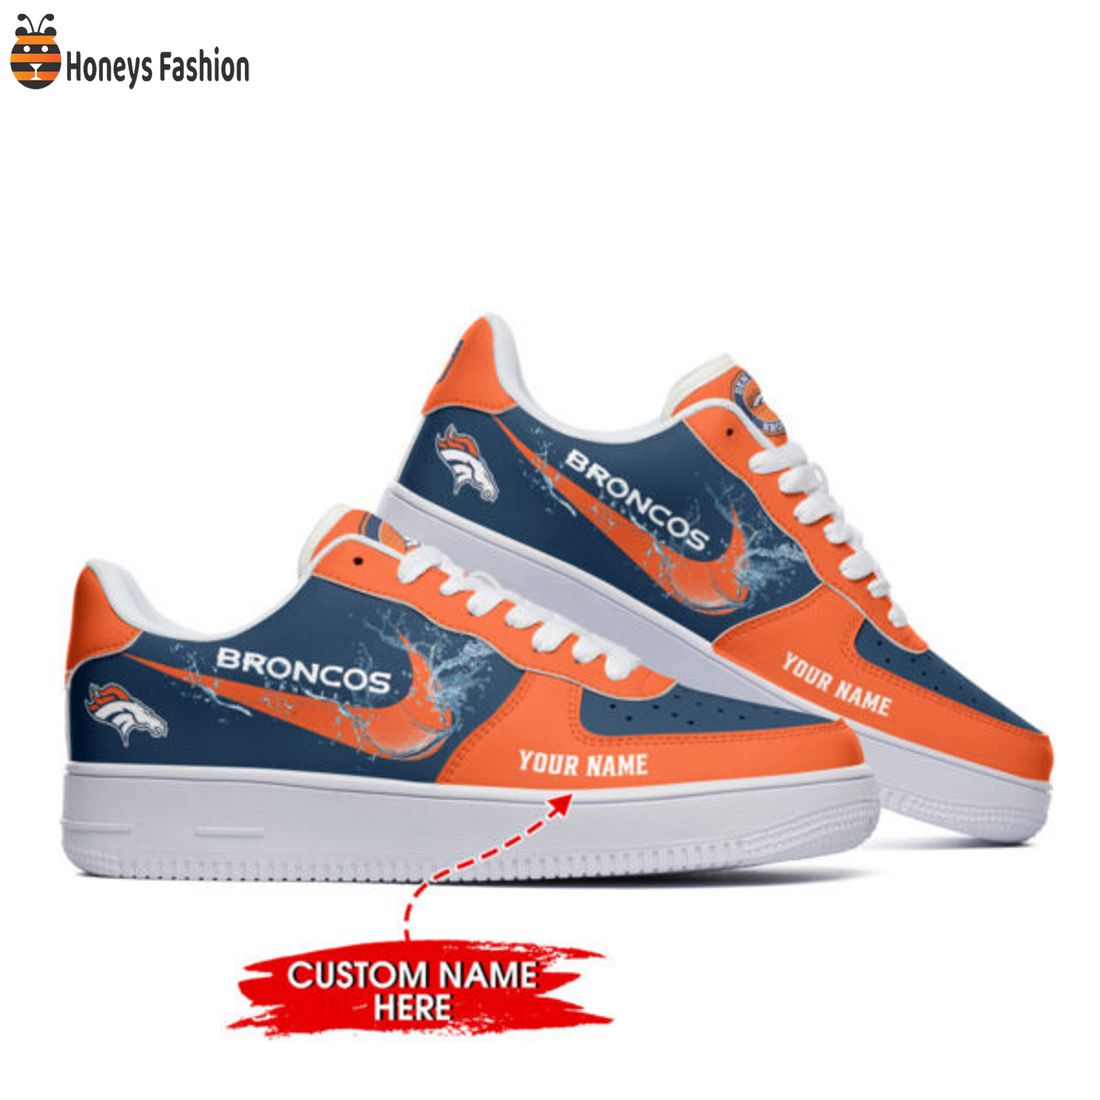 TRENDING Denver Broncos NFL Personalized Name Nike Air Force 1 Sneakers Ver 1